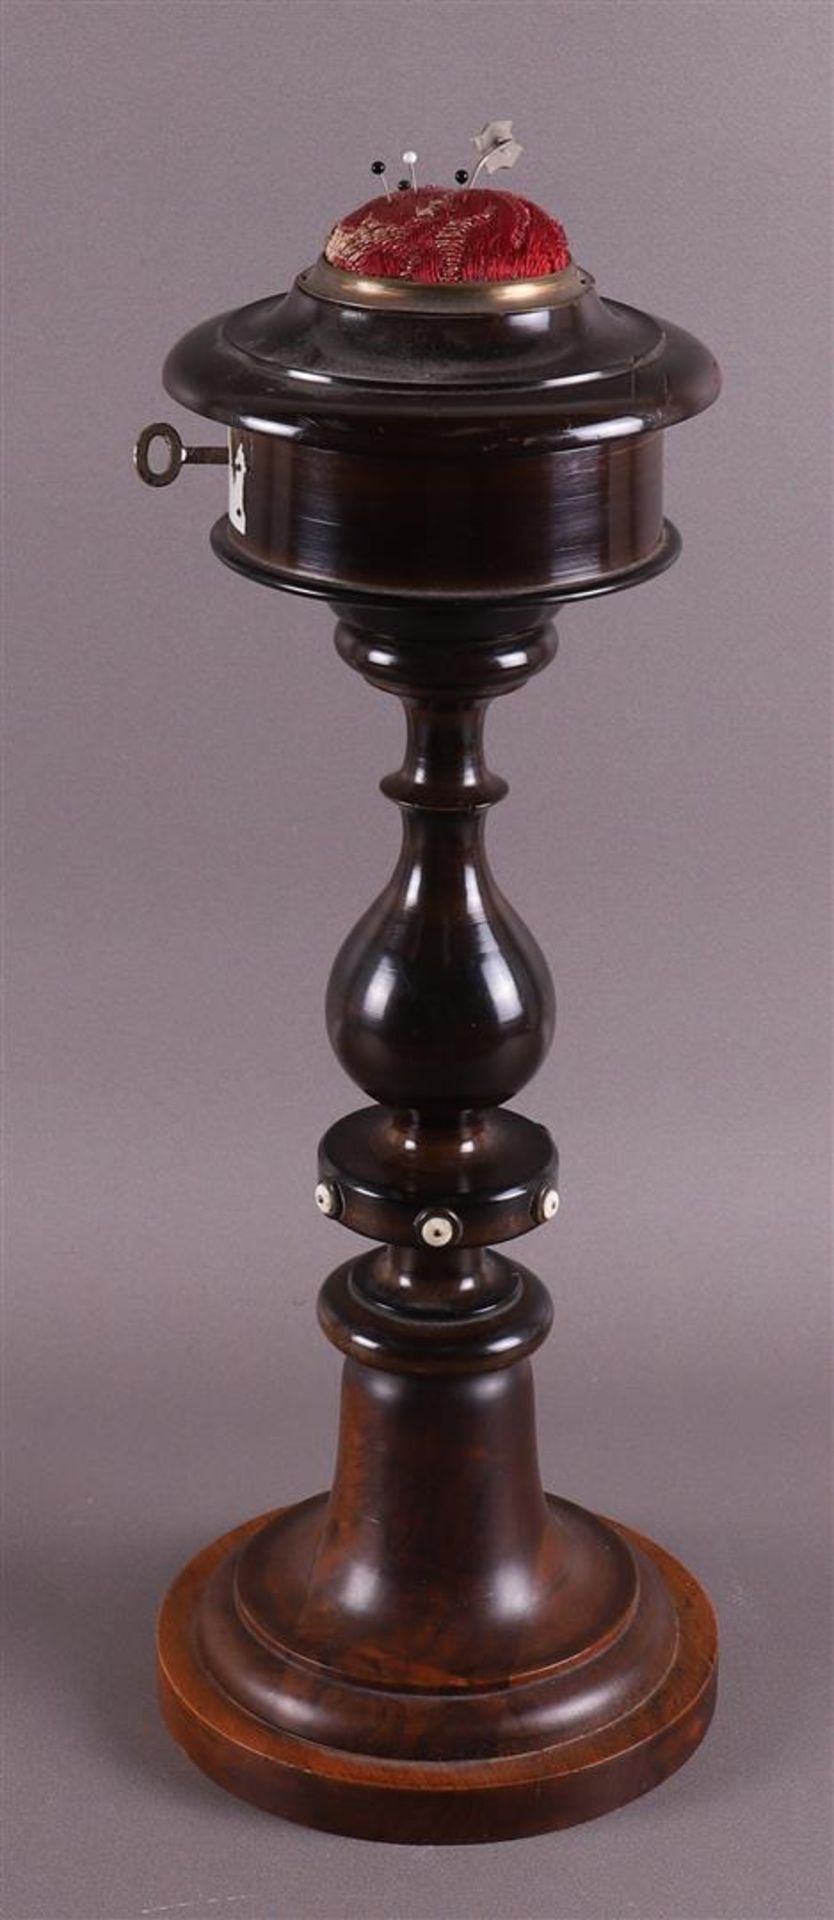 A pincushion on a walnut stand, around 1900.